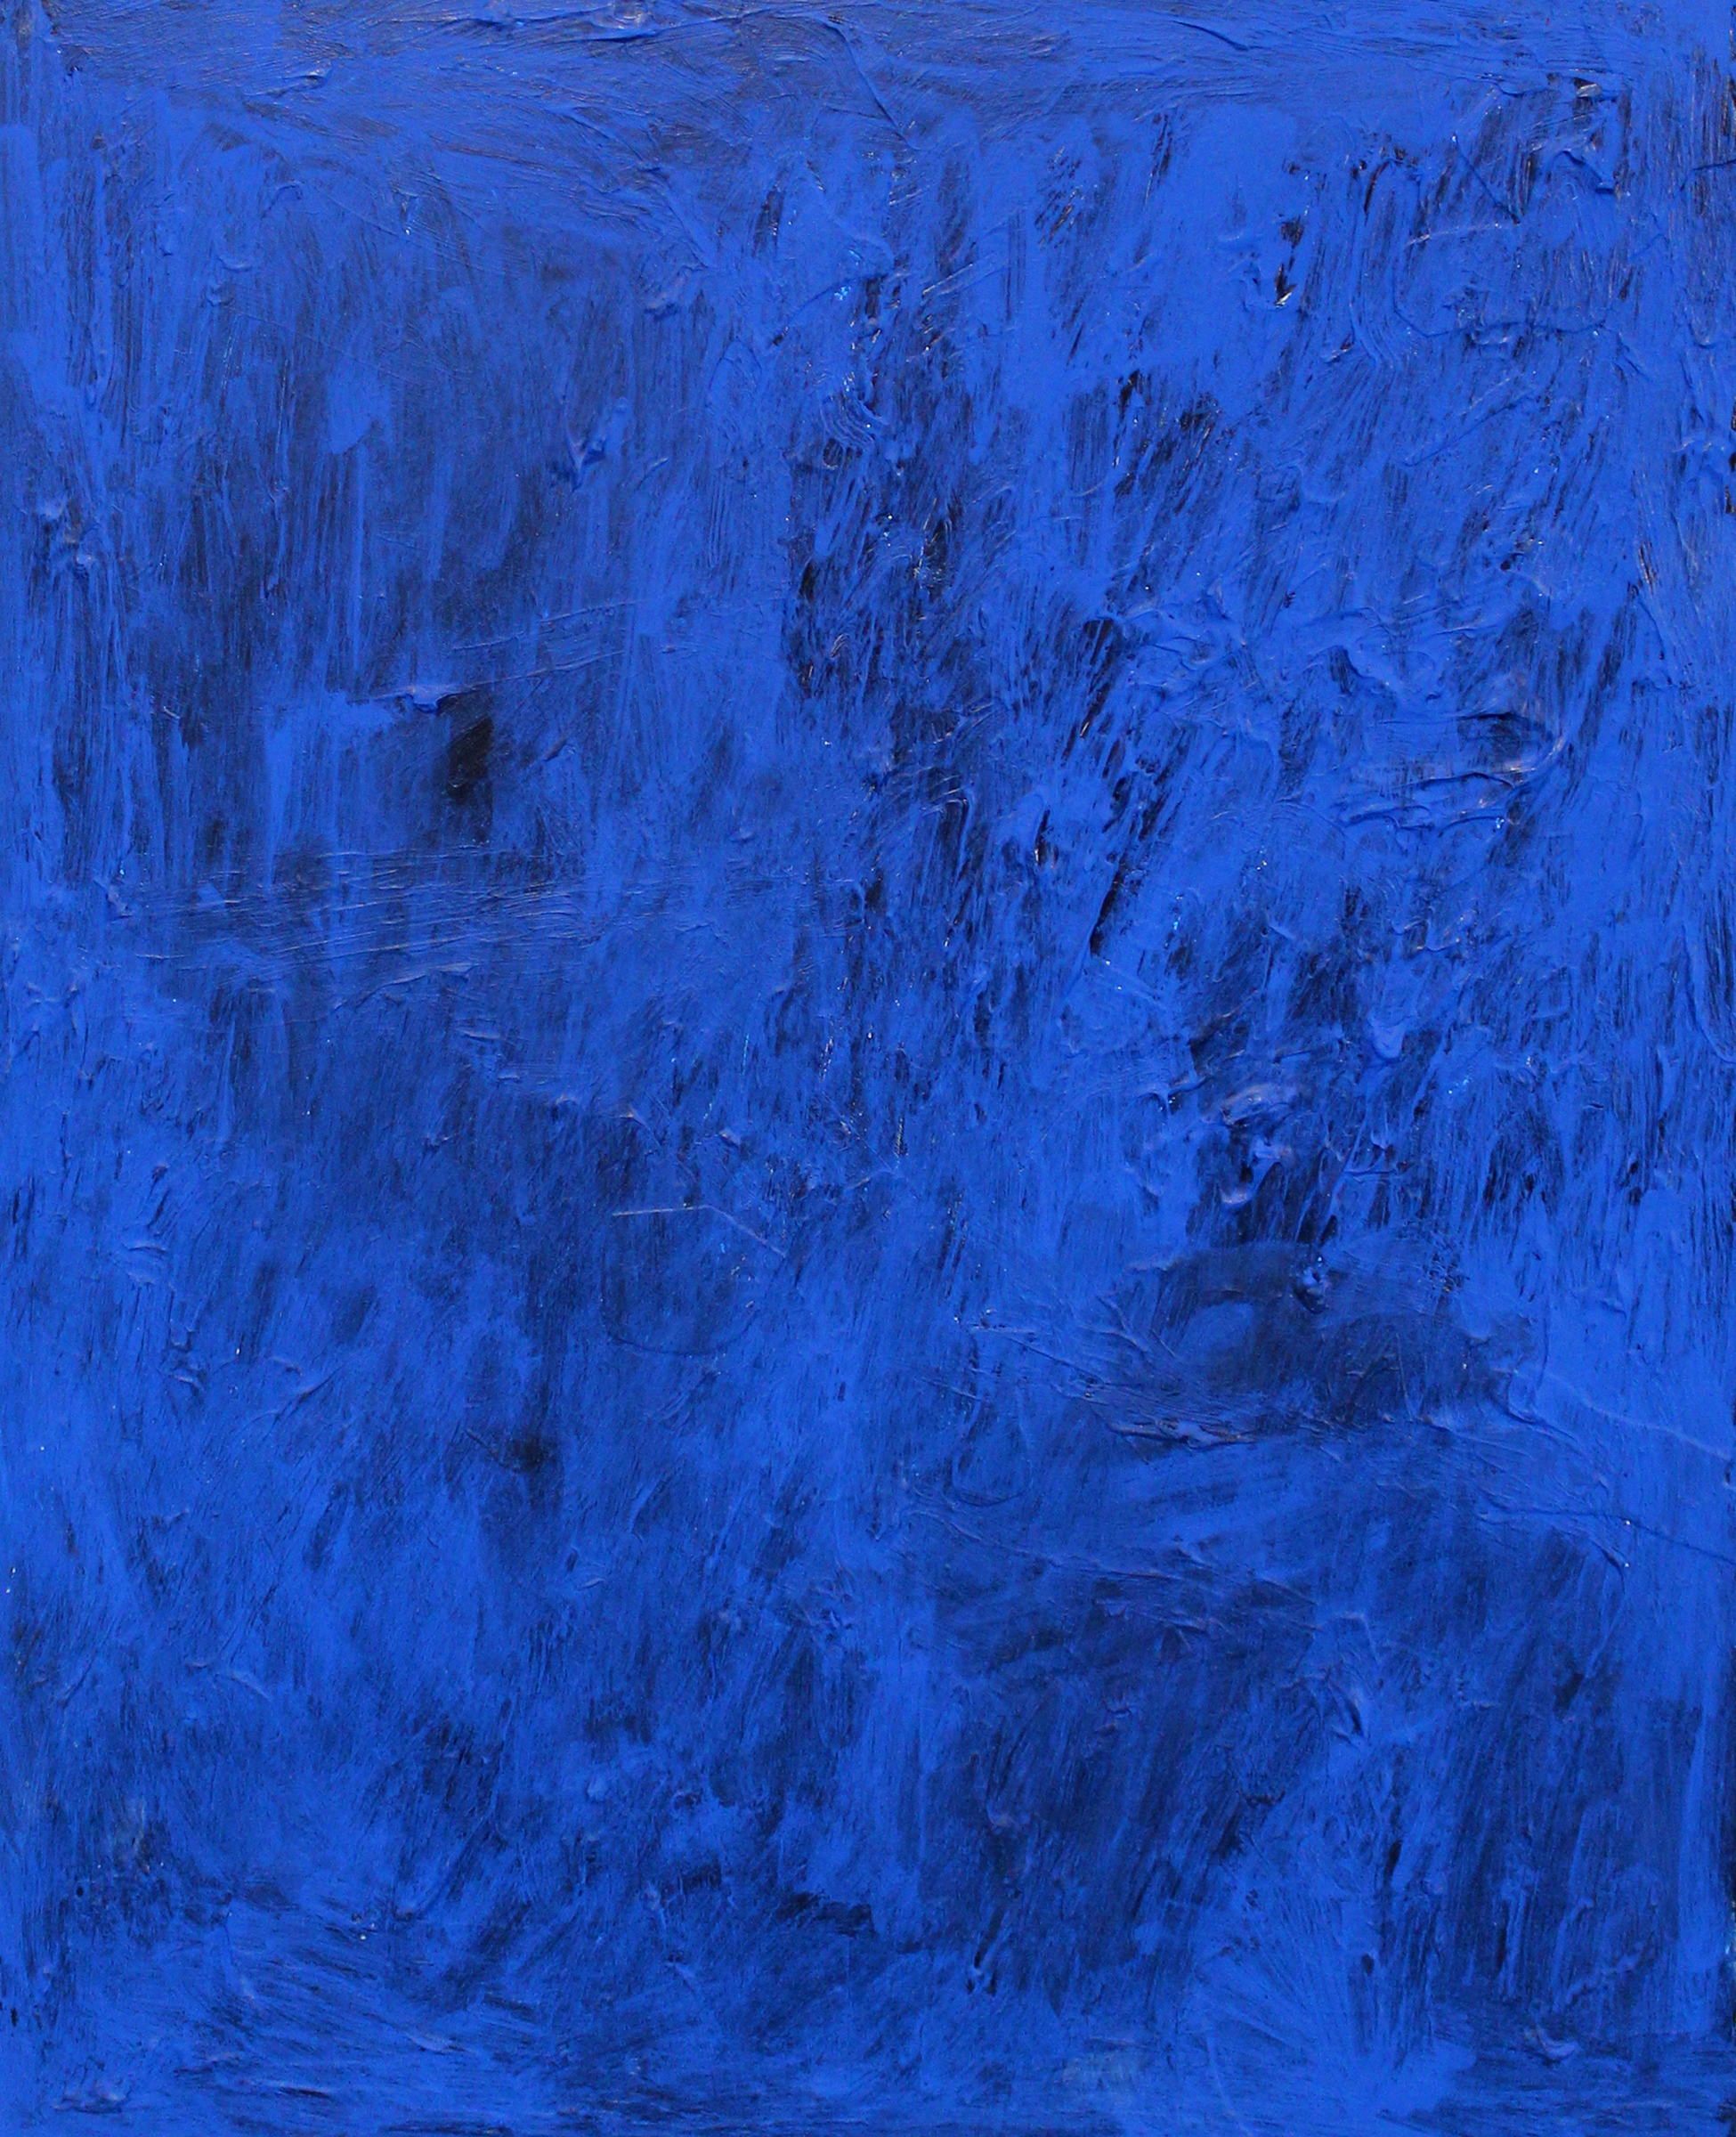   JOSEPH HART   Untitled (Blueberry) , acrylic on panel, 20" x 16", 2013 